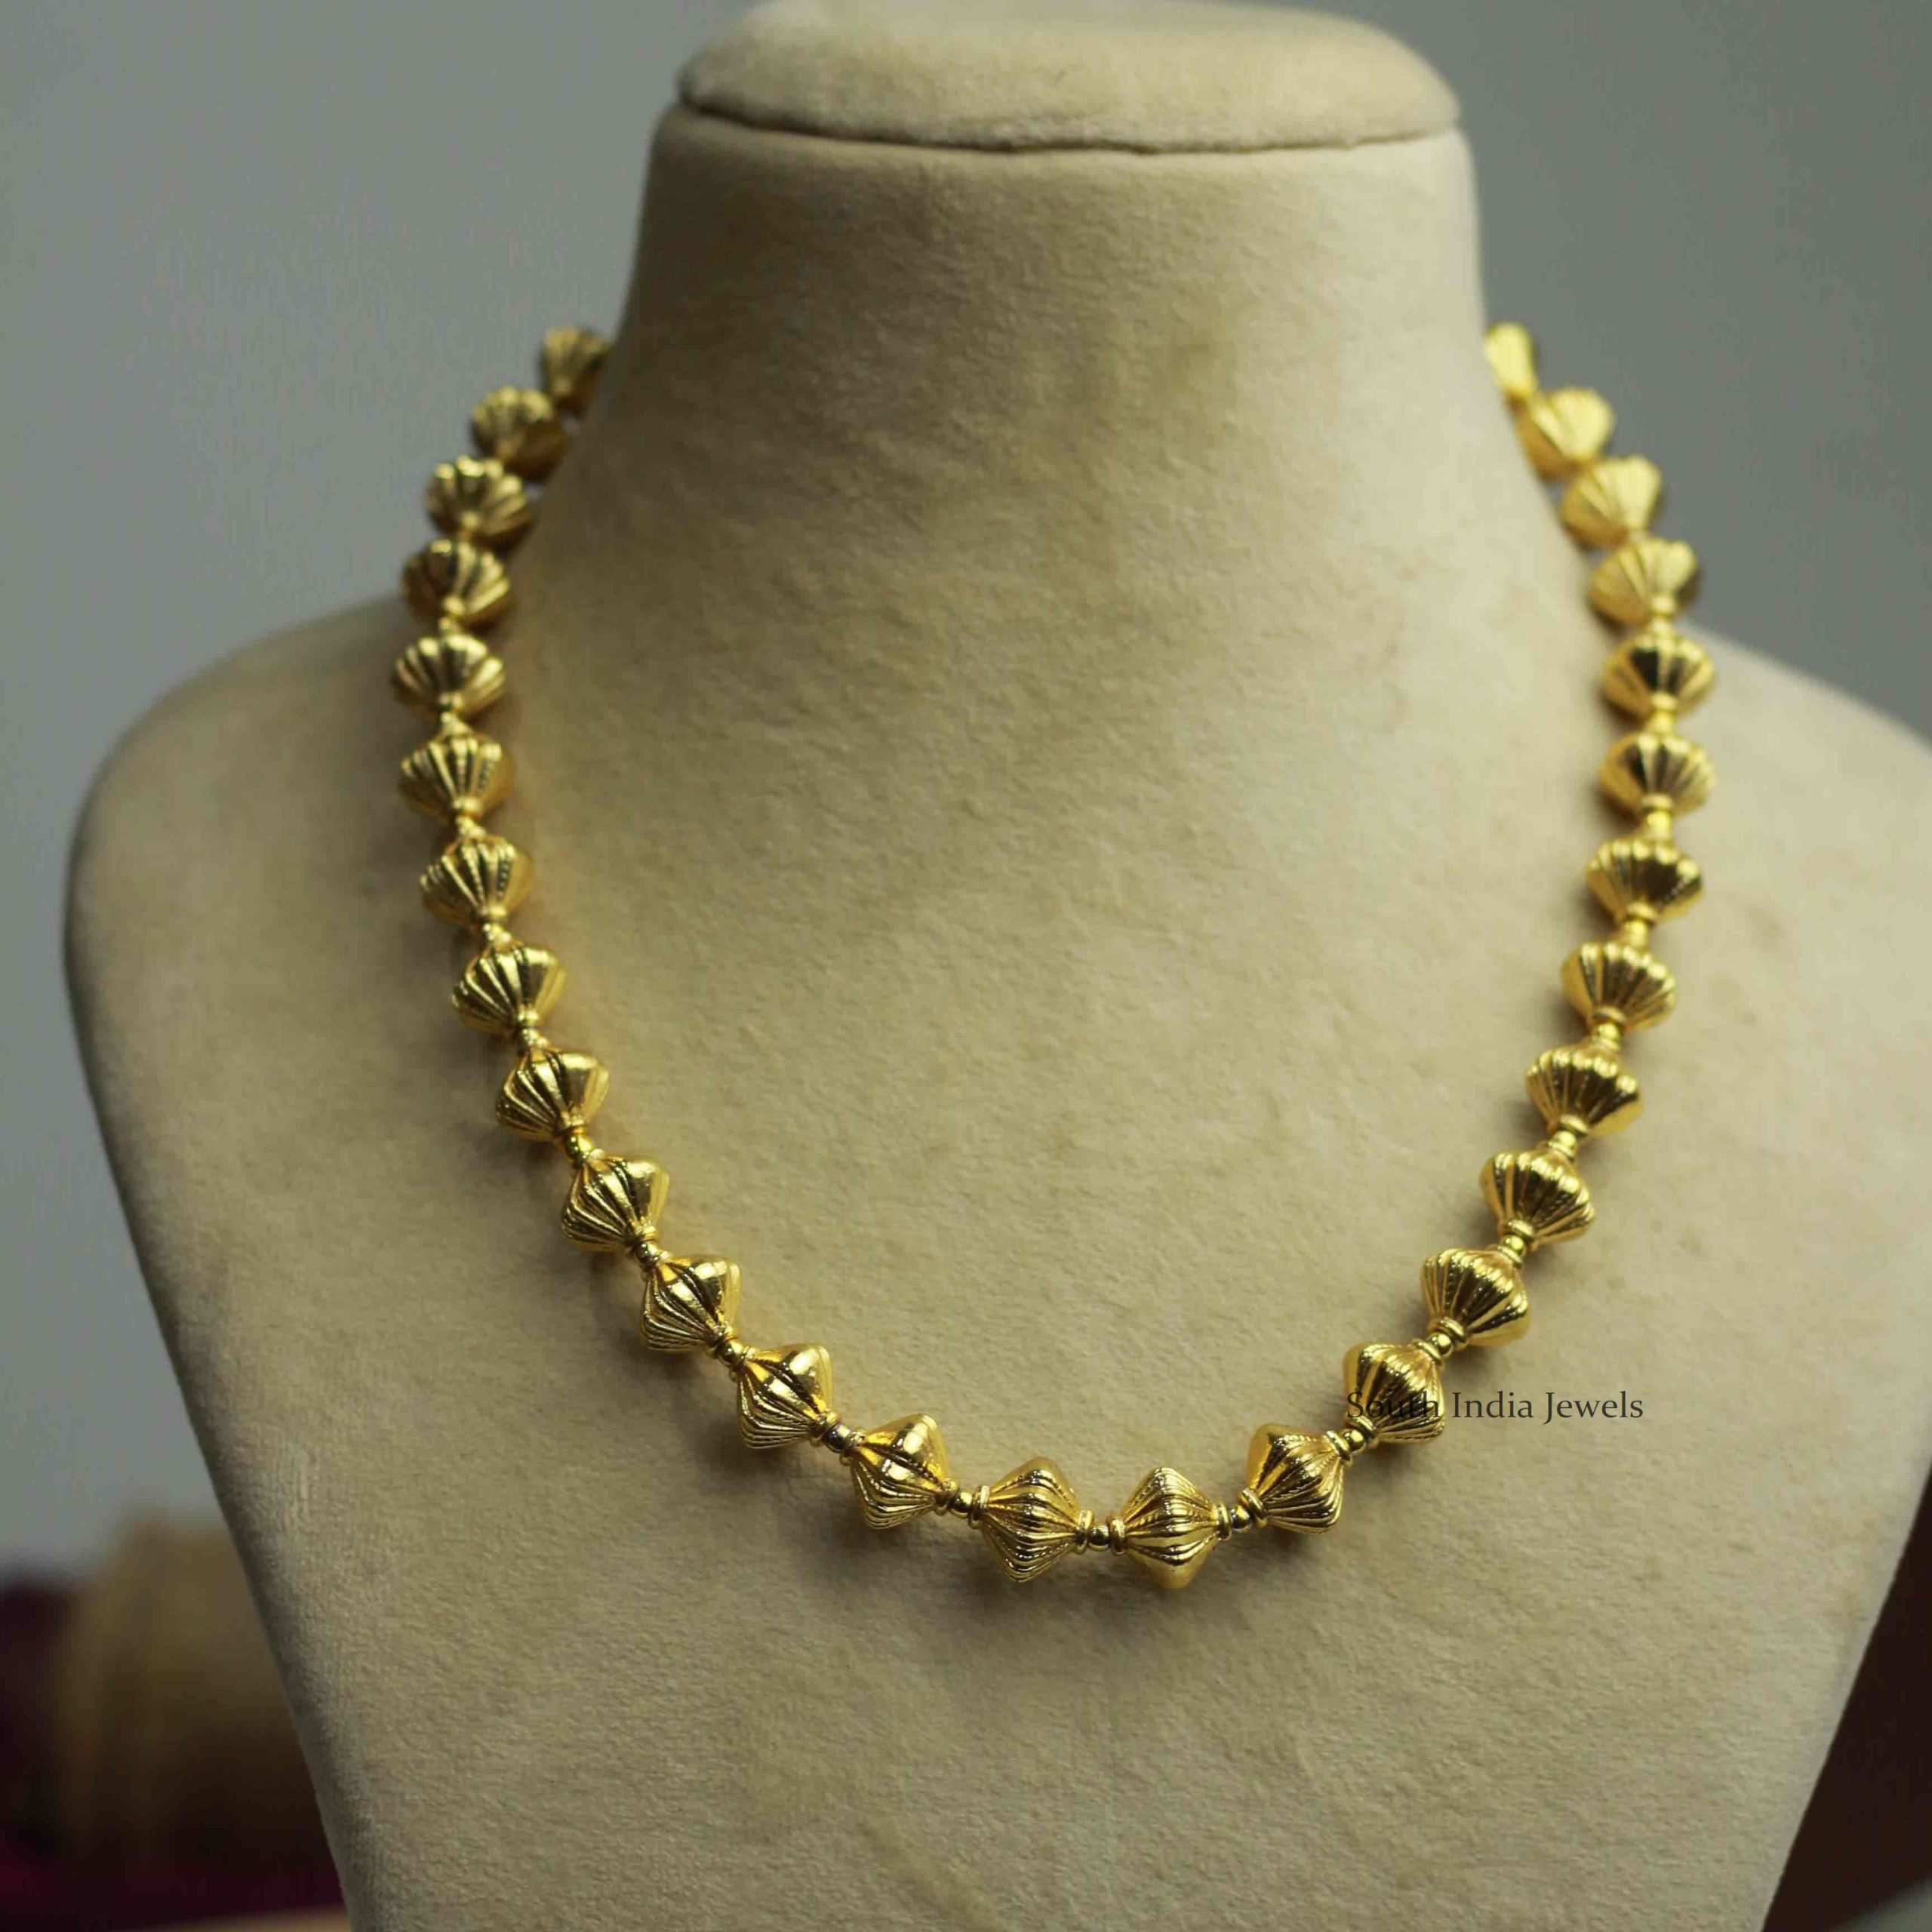 Antique Bead Design Necklace